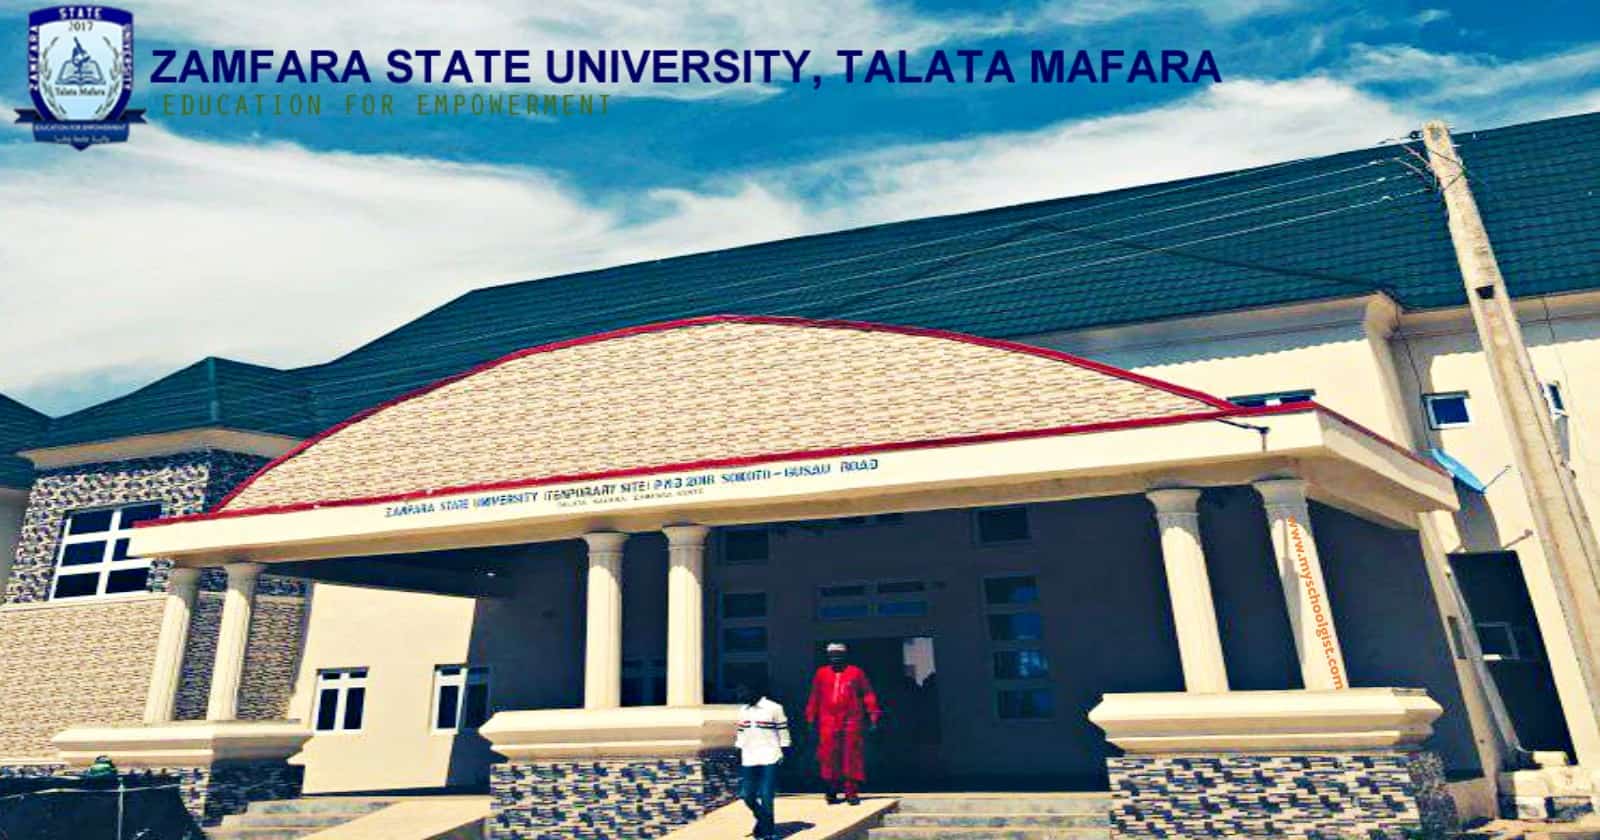 Zamfara State University, Talata Mafara (ZAMSUT) Matriculation and Orientation